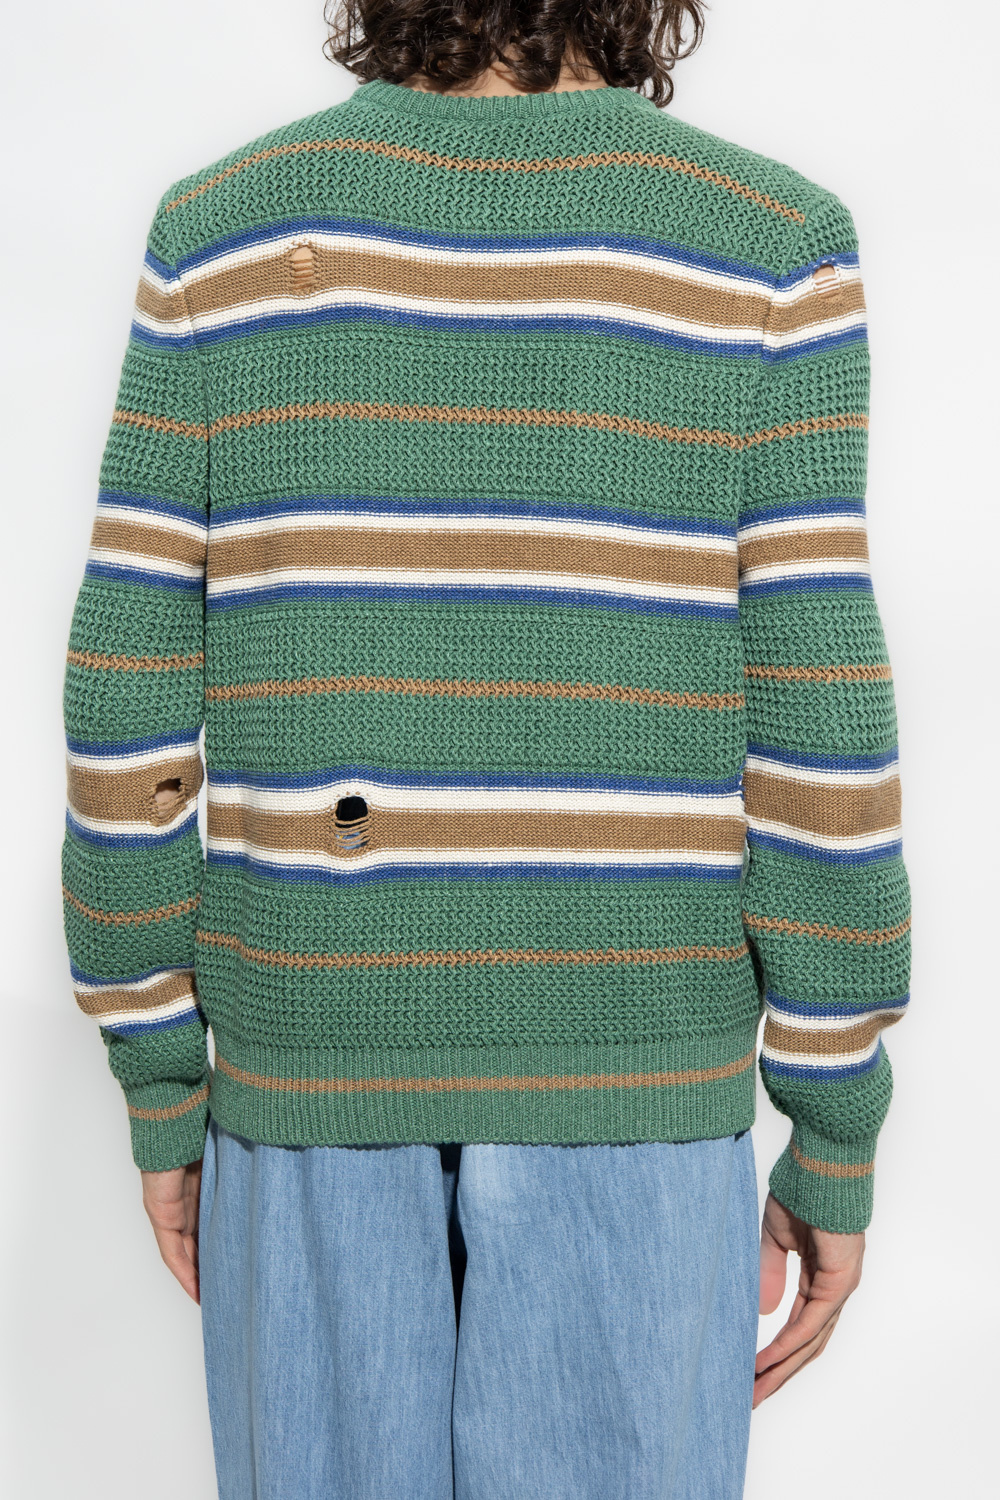 LOUIS VUITTON blue white wool blend STRIPED Crewneck Sweater L at